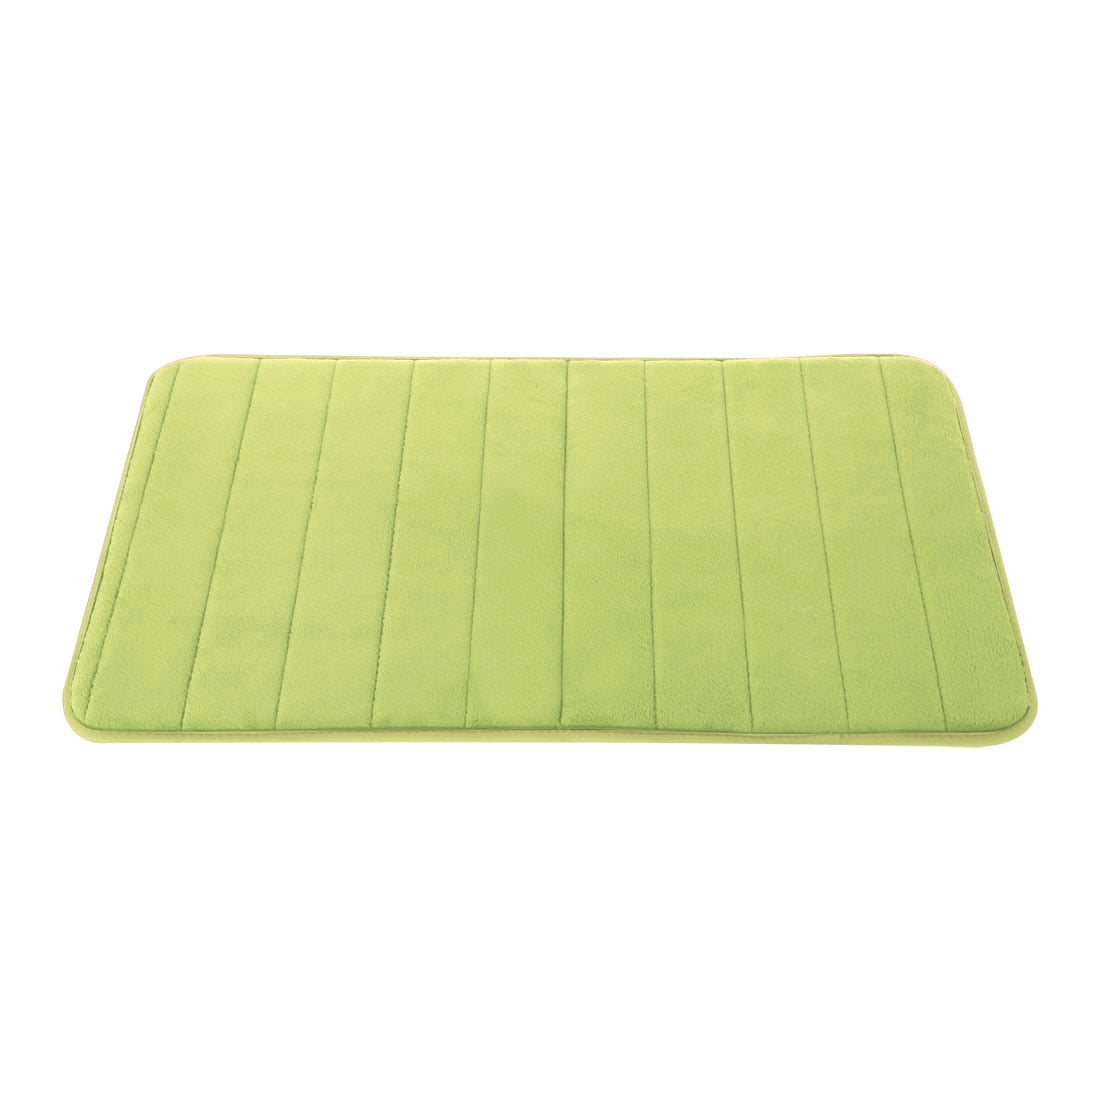 Non-slip Coral Green Anti-Skid Mat Bathroom Memory Foam Floor Rug Carpet Sales! 